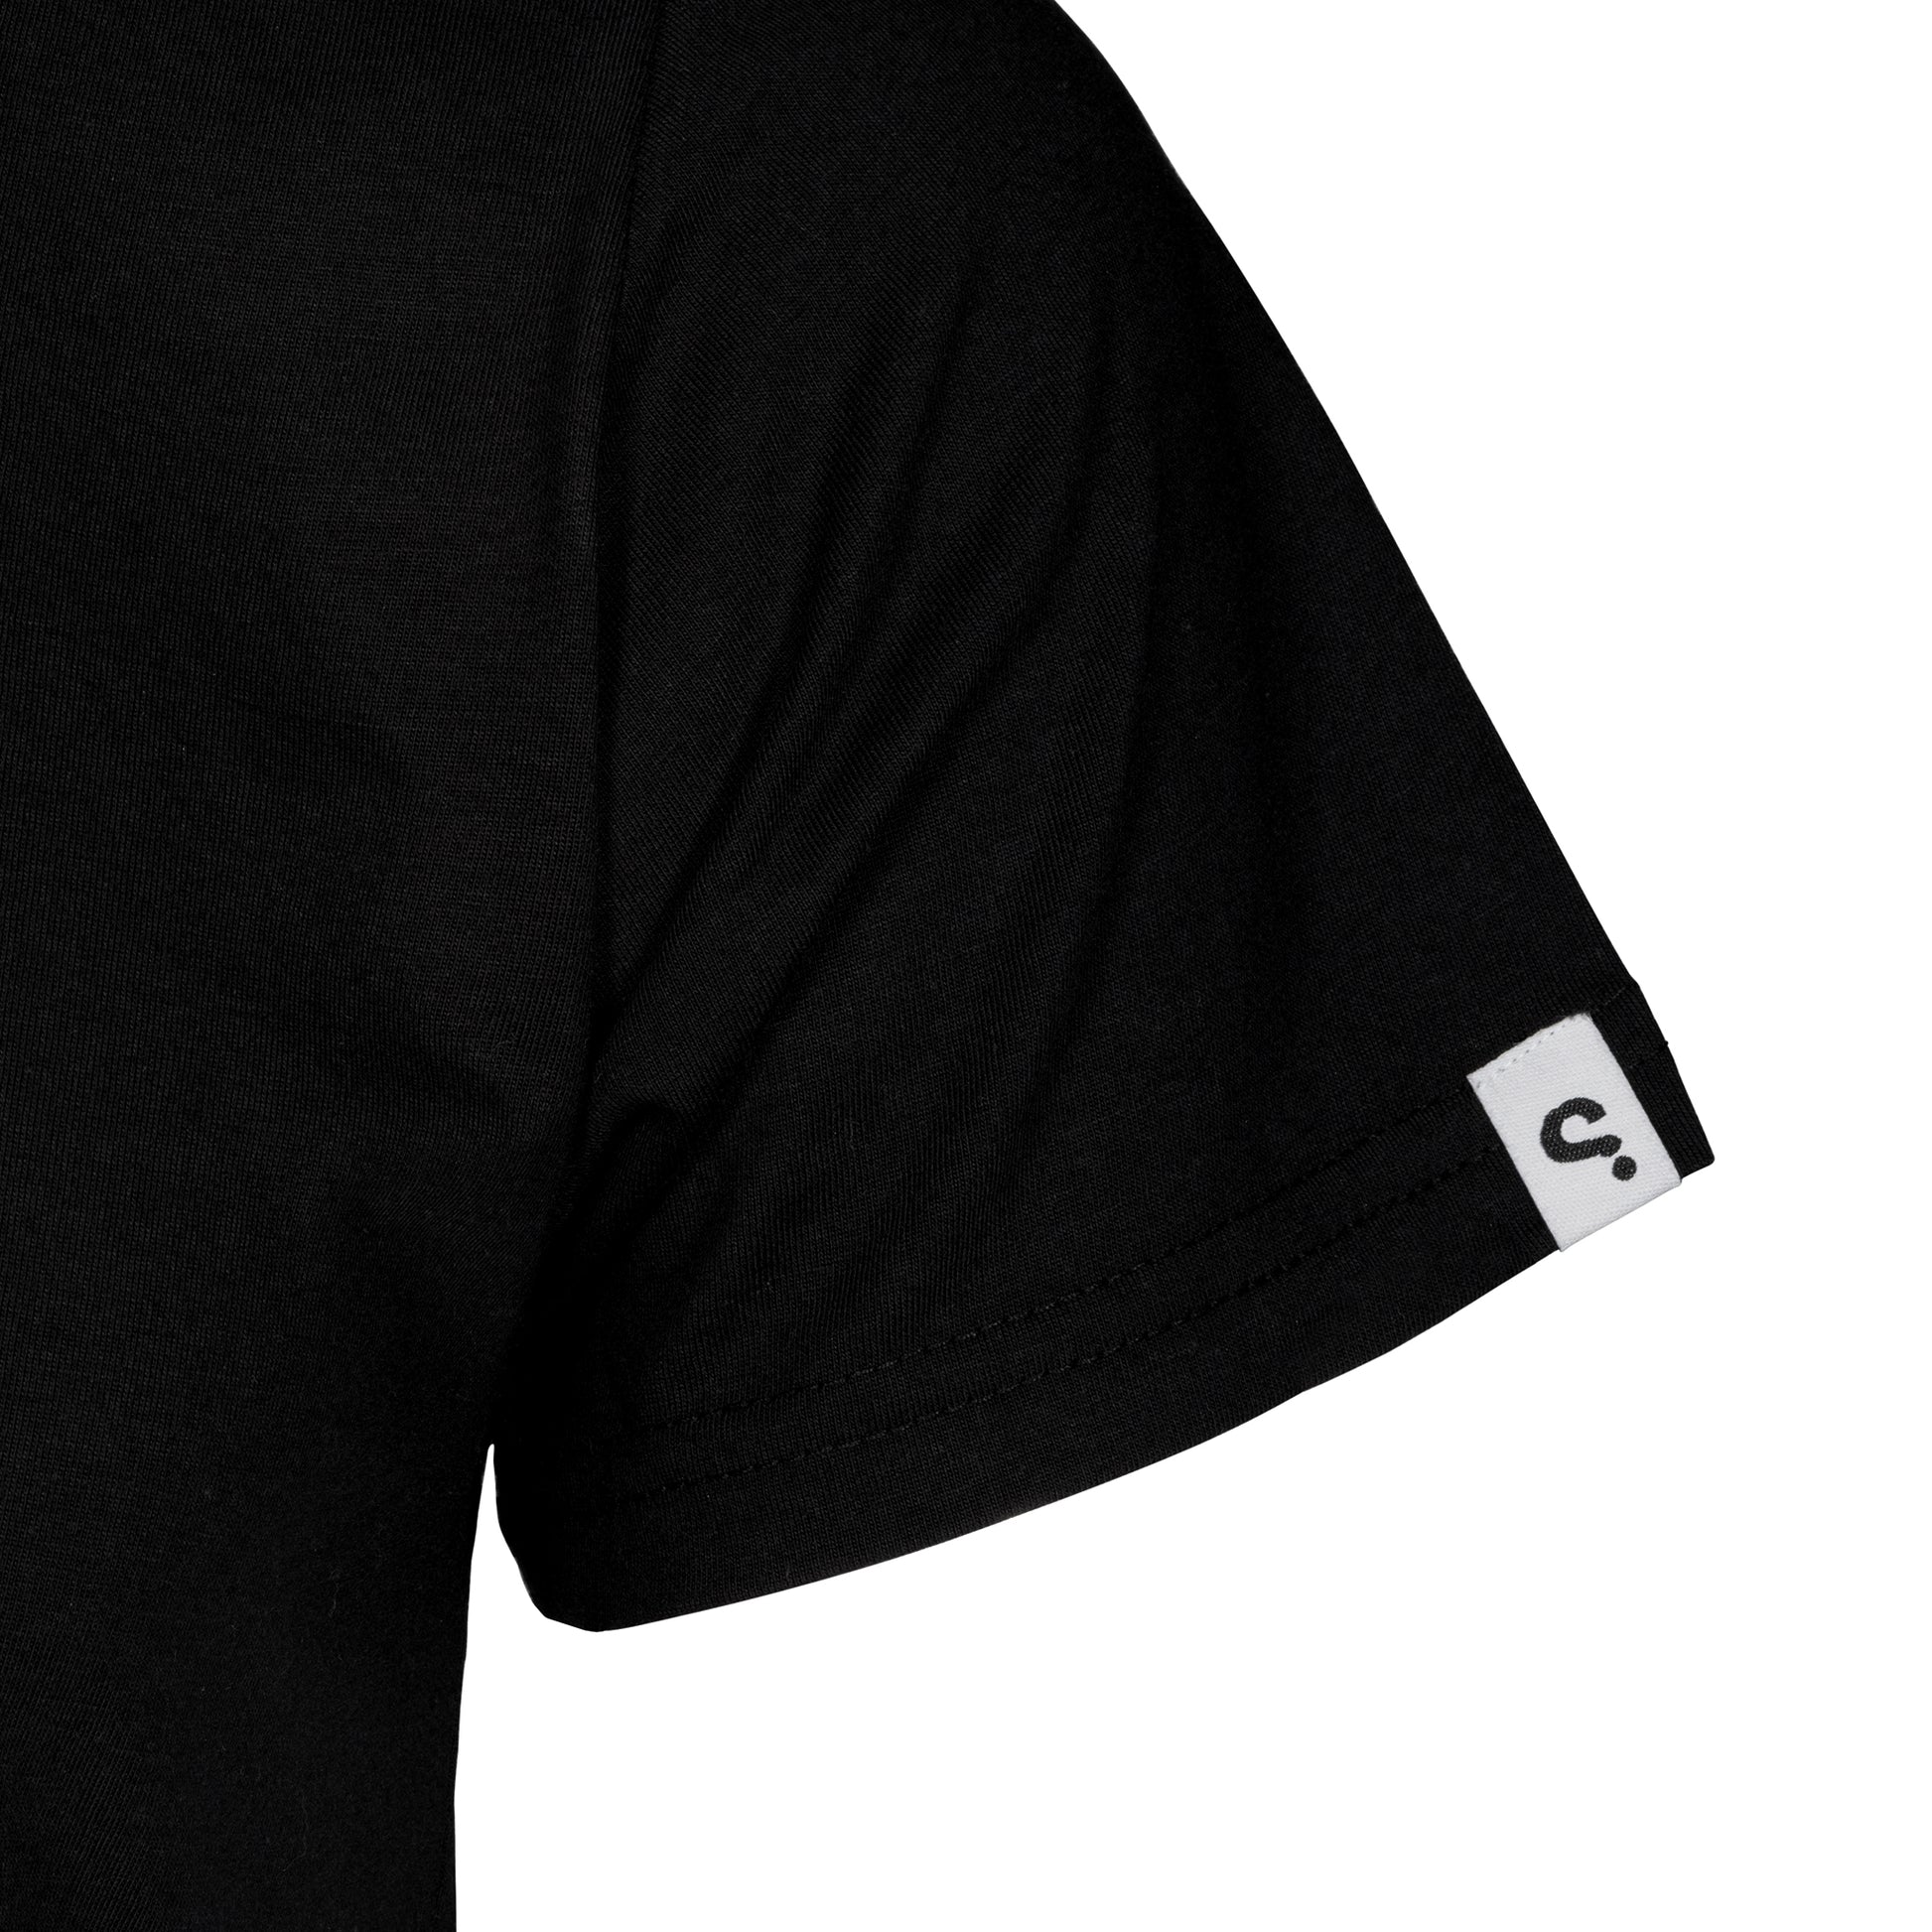 SPYSCAPE Spymaster T-shirt with Hidden Zip Pocket - logo sleeve tag 